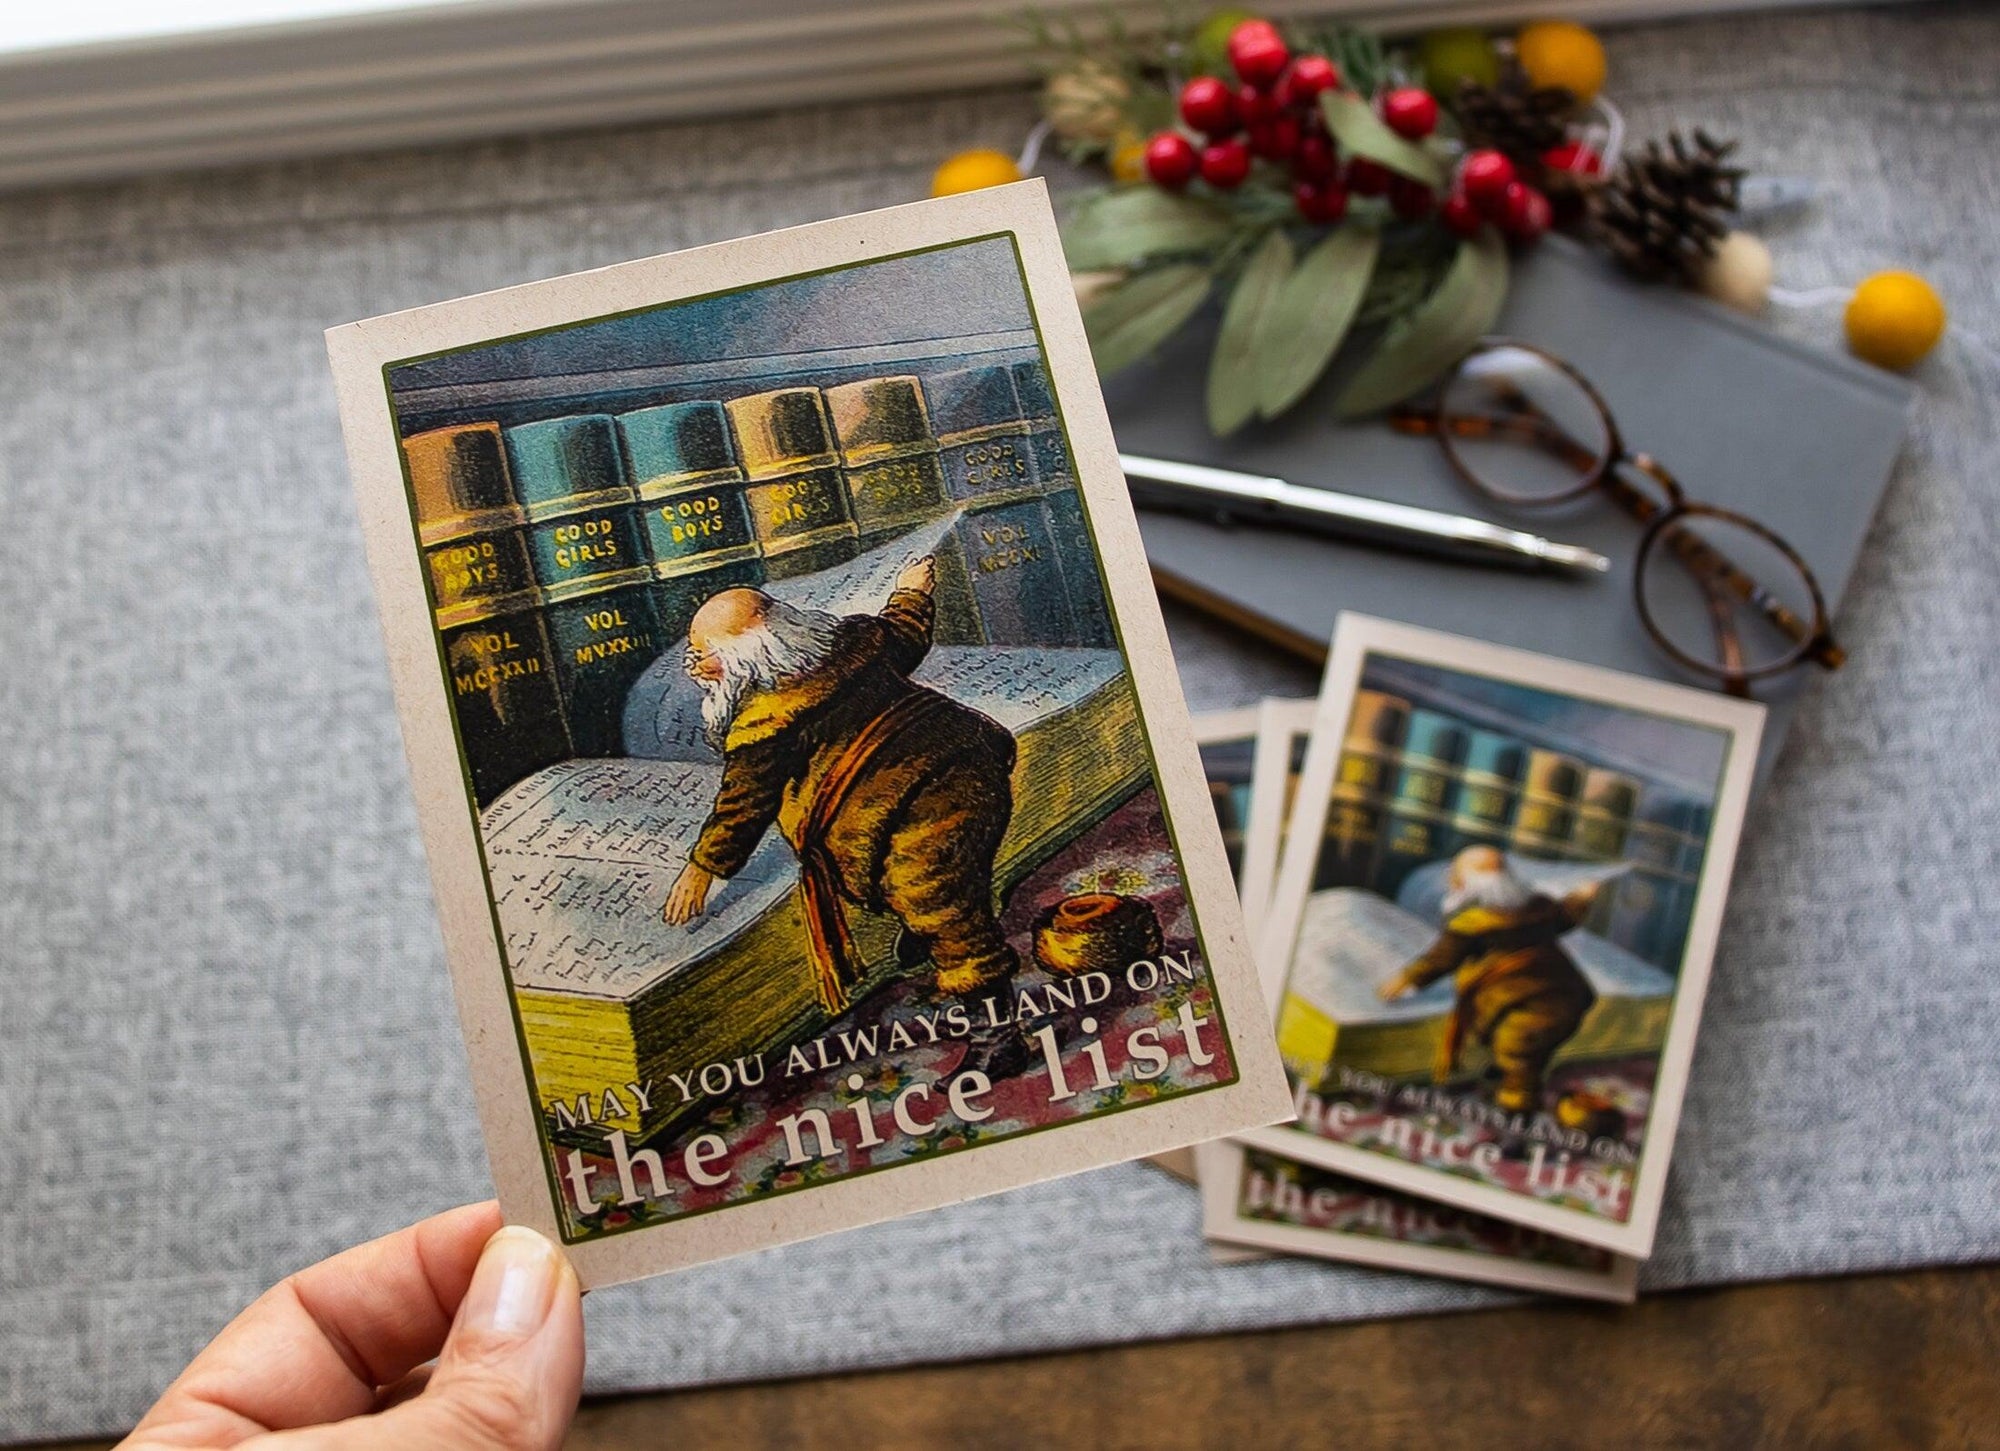 Santa Claus Christmas Card - Bookish Christmas Card - Naughty or Nice List Holiday Card